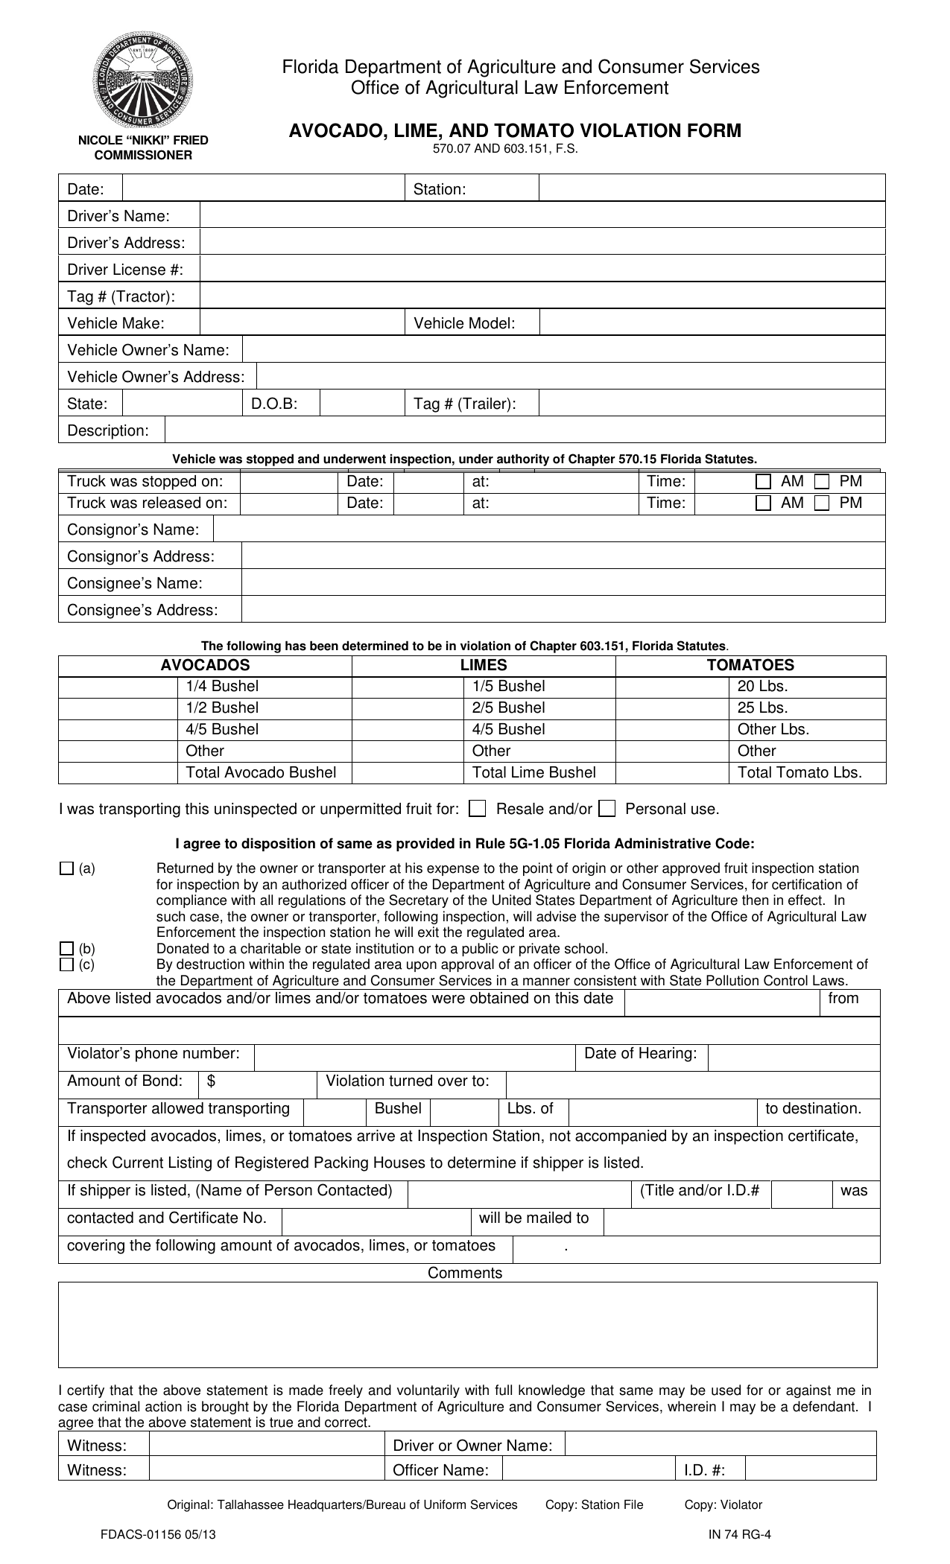 Form FDACS-01156 Avocado, Lime, and Tomato Violation Form - Florida, Page 1